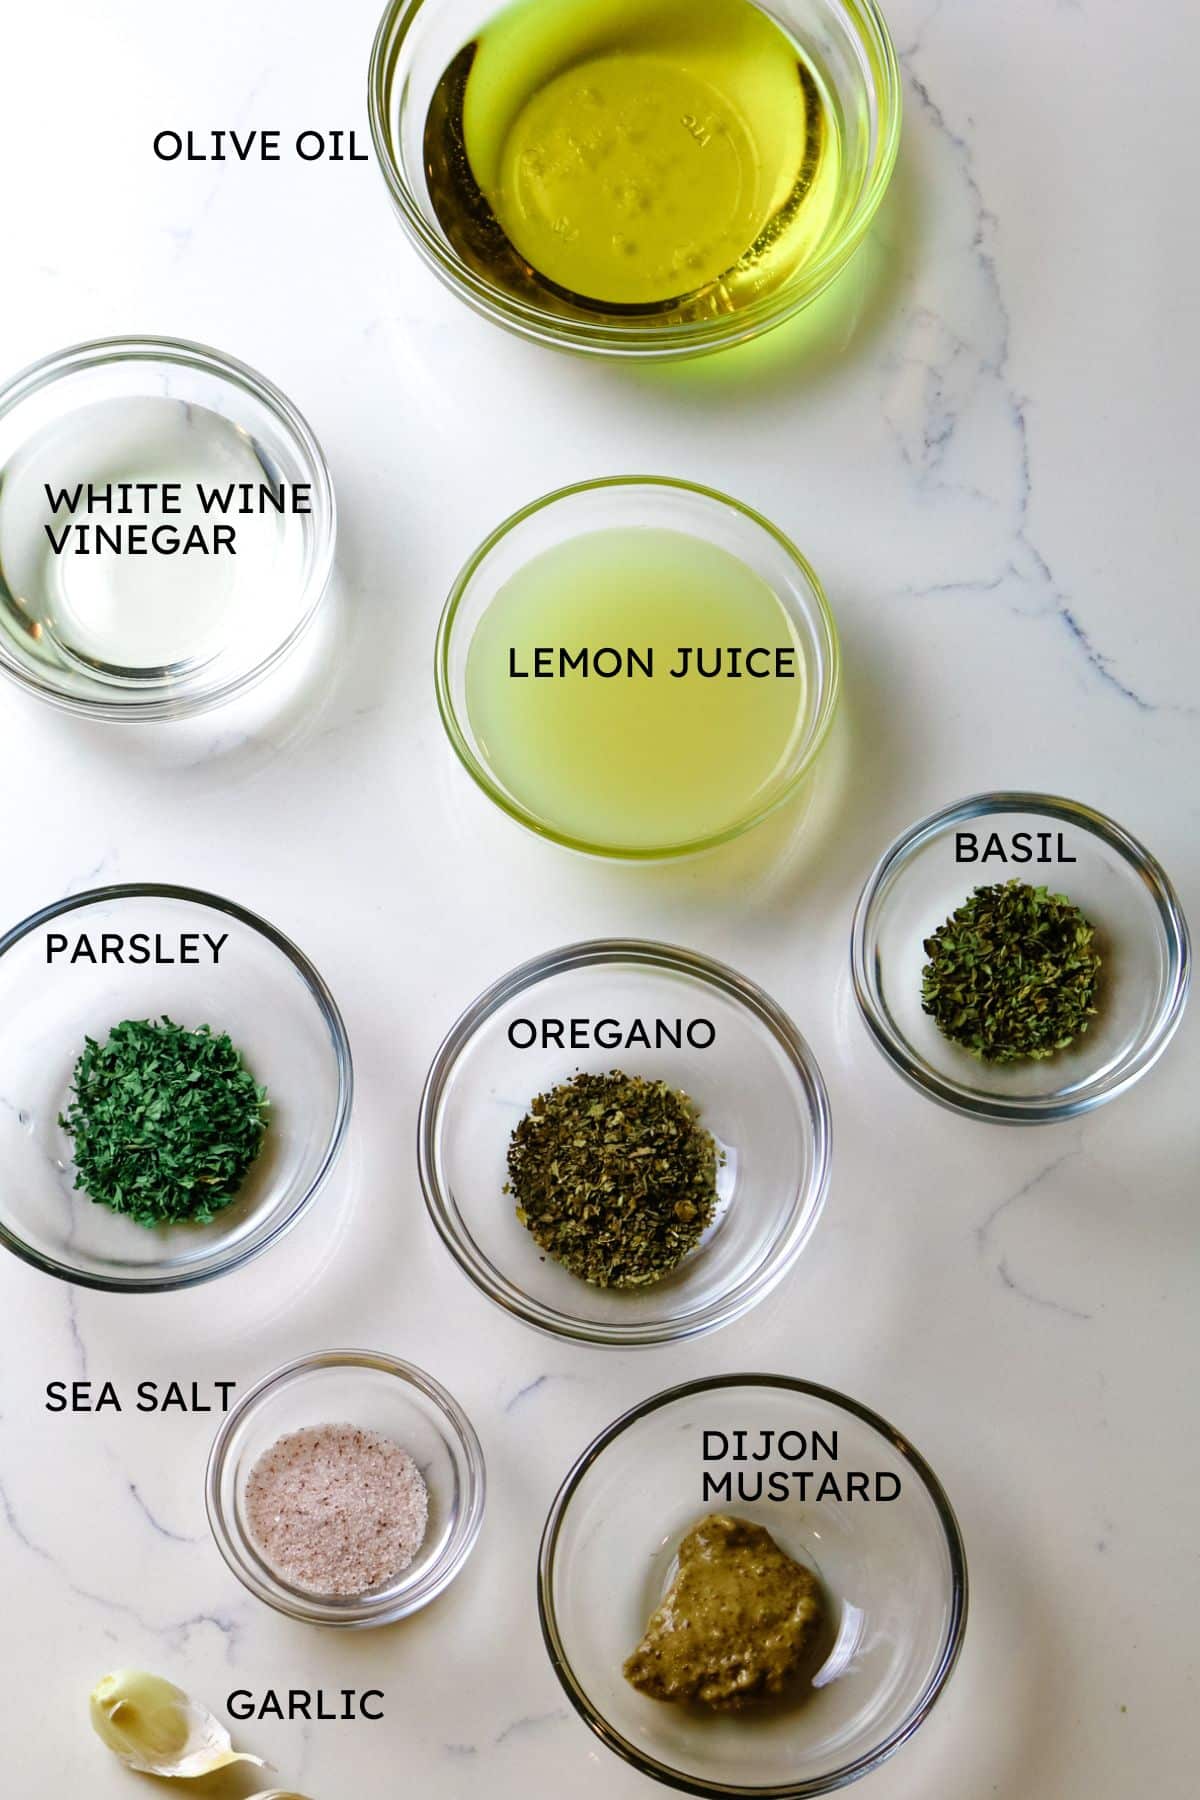 ingredients for salad dressing with olive oil, white wine vinegar, lemon juice, herbs, and Dijon mustard.